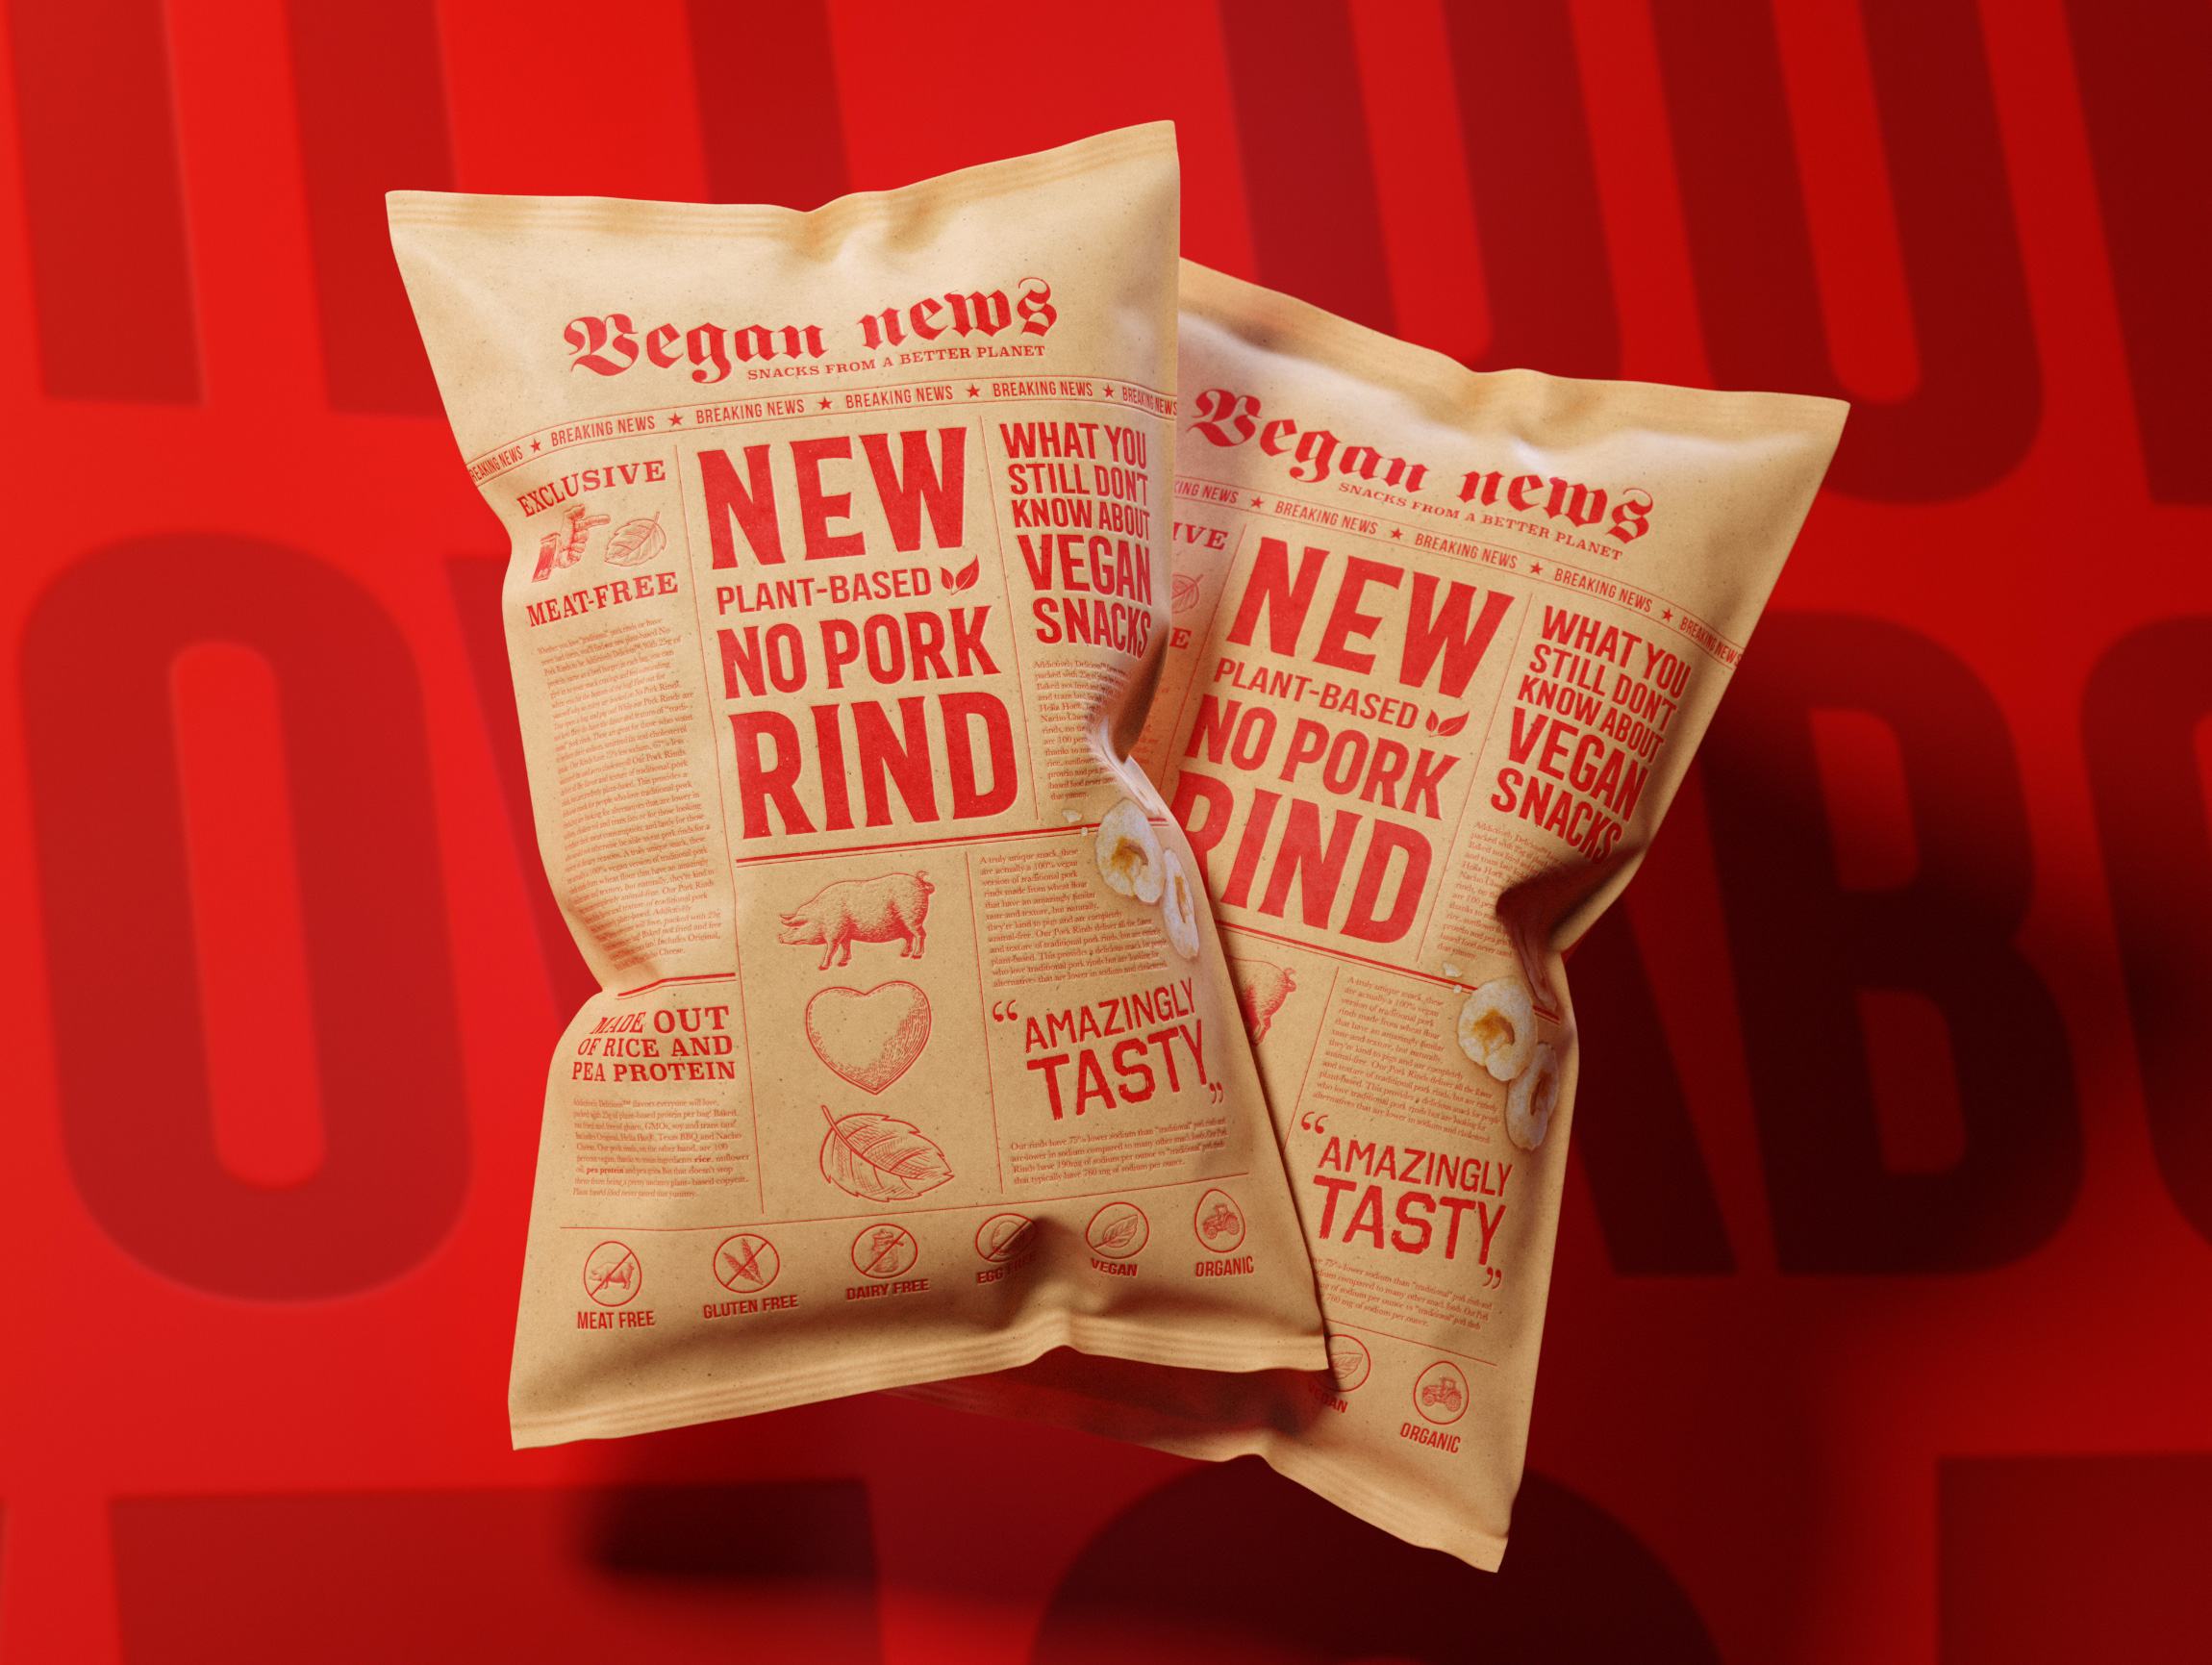 Vegan News! Plan-Based No Pork Rind Chips